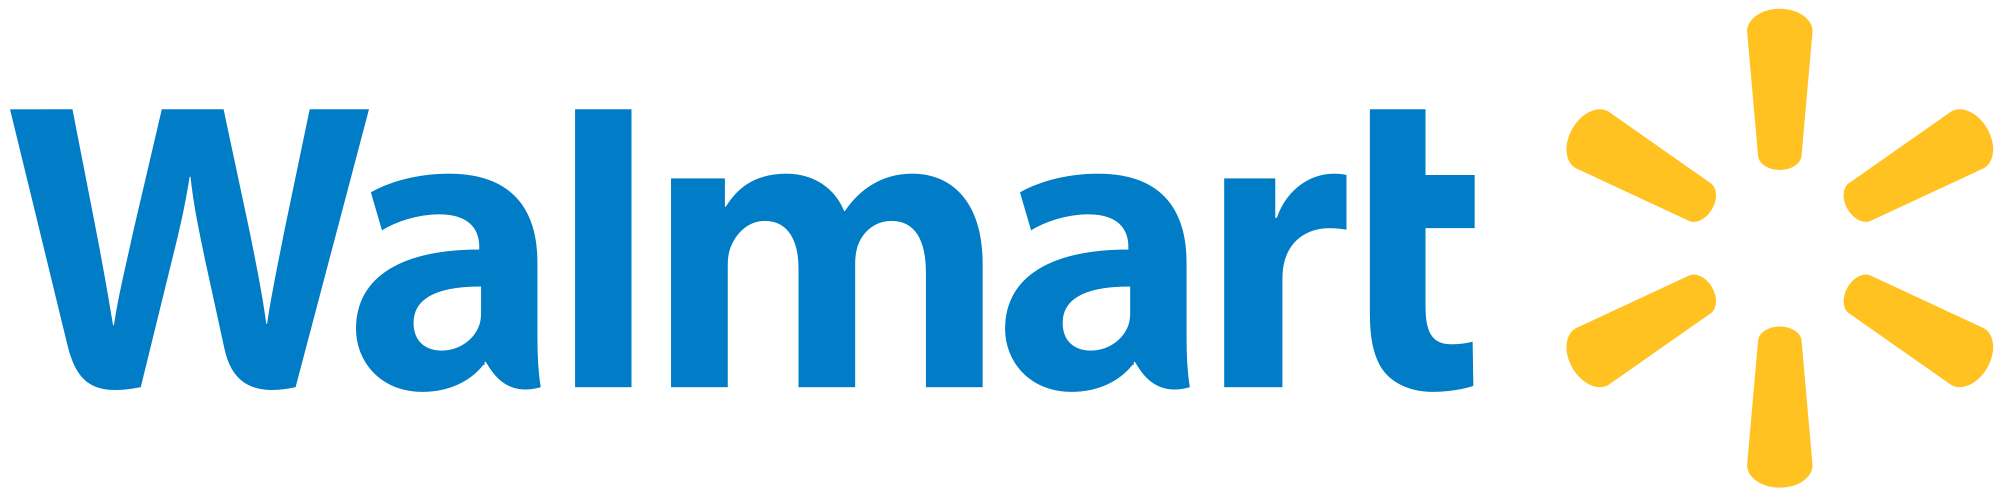 Walmart_logo.svg.png